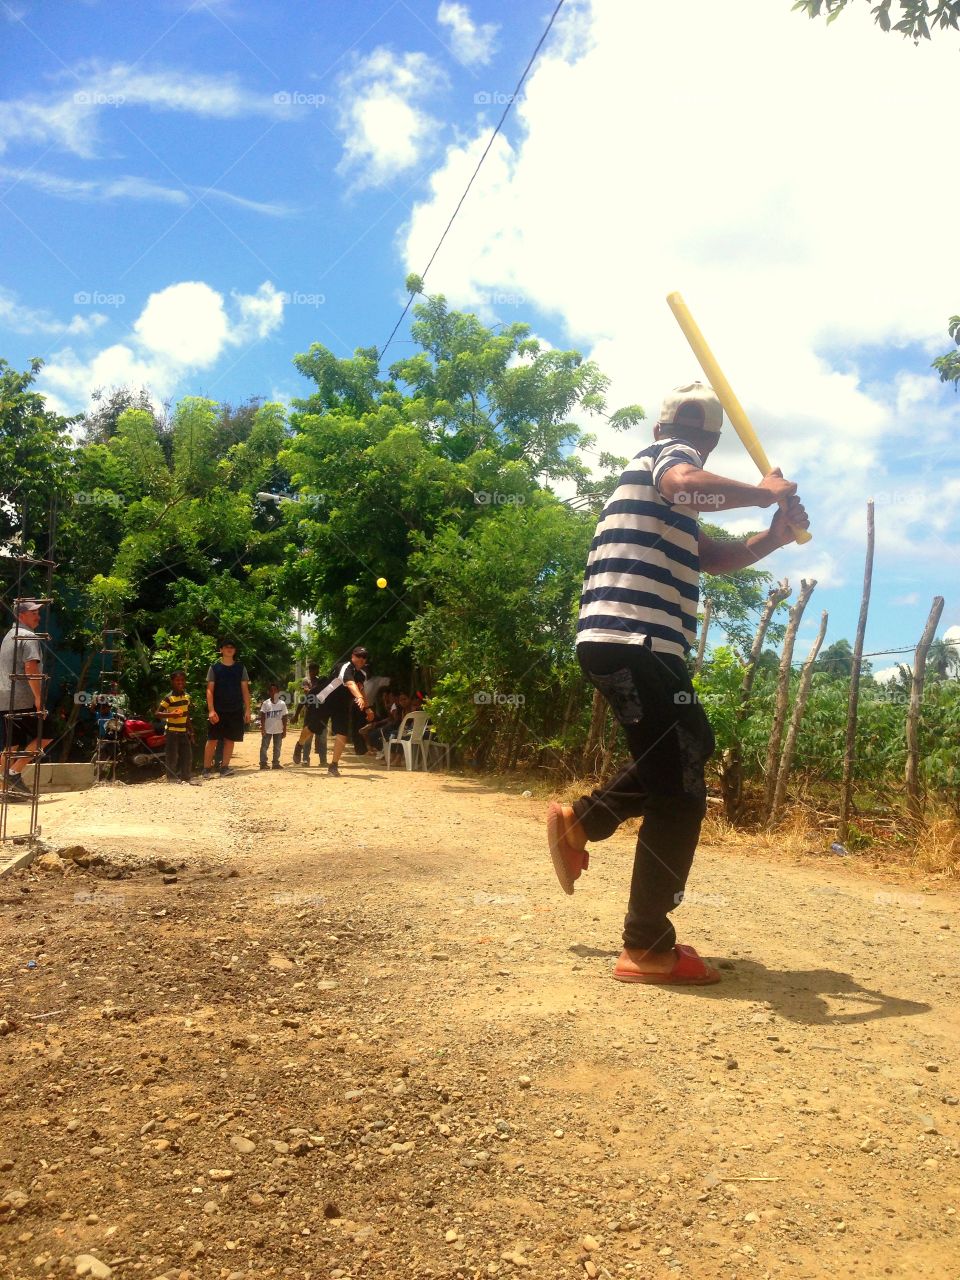 Street baseball in the Dominican Republic 